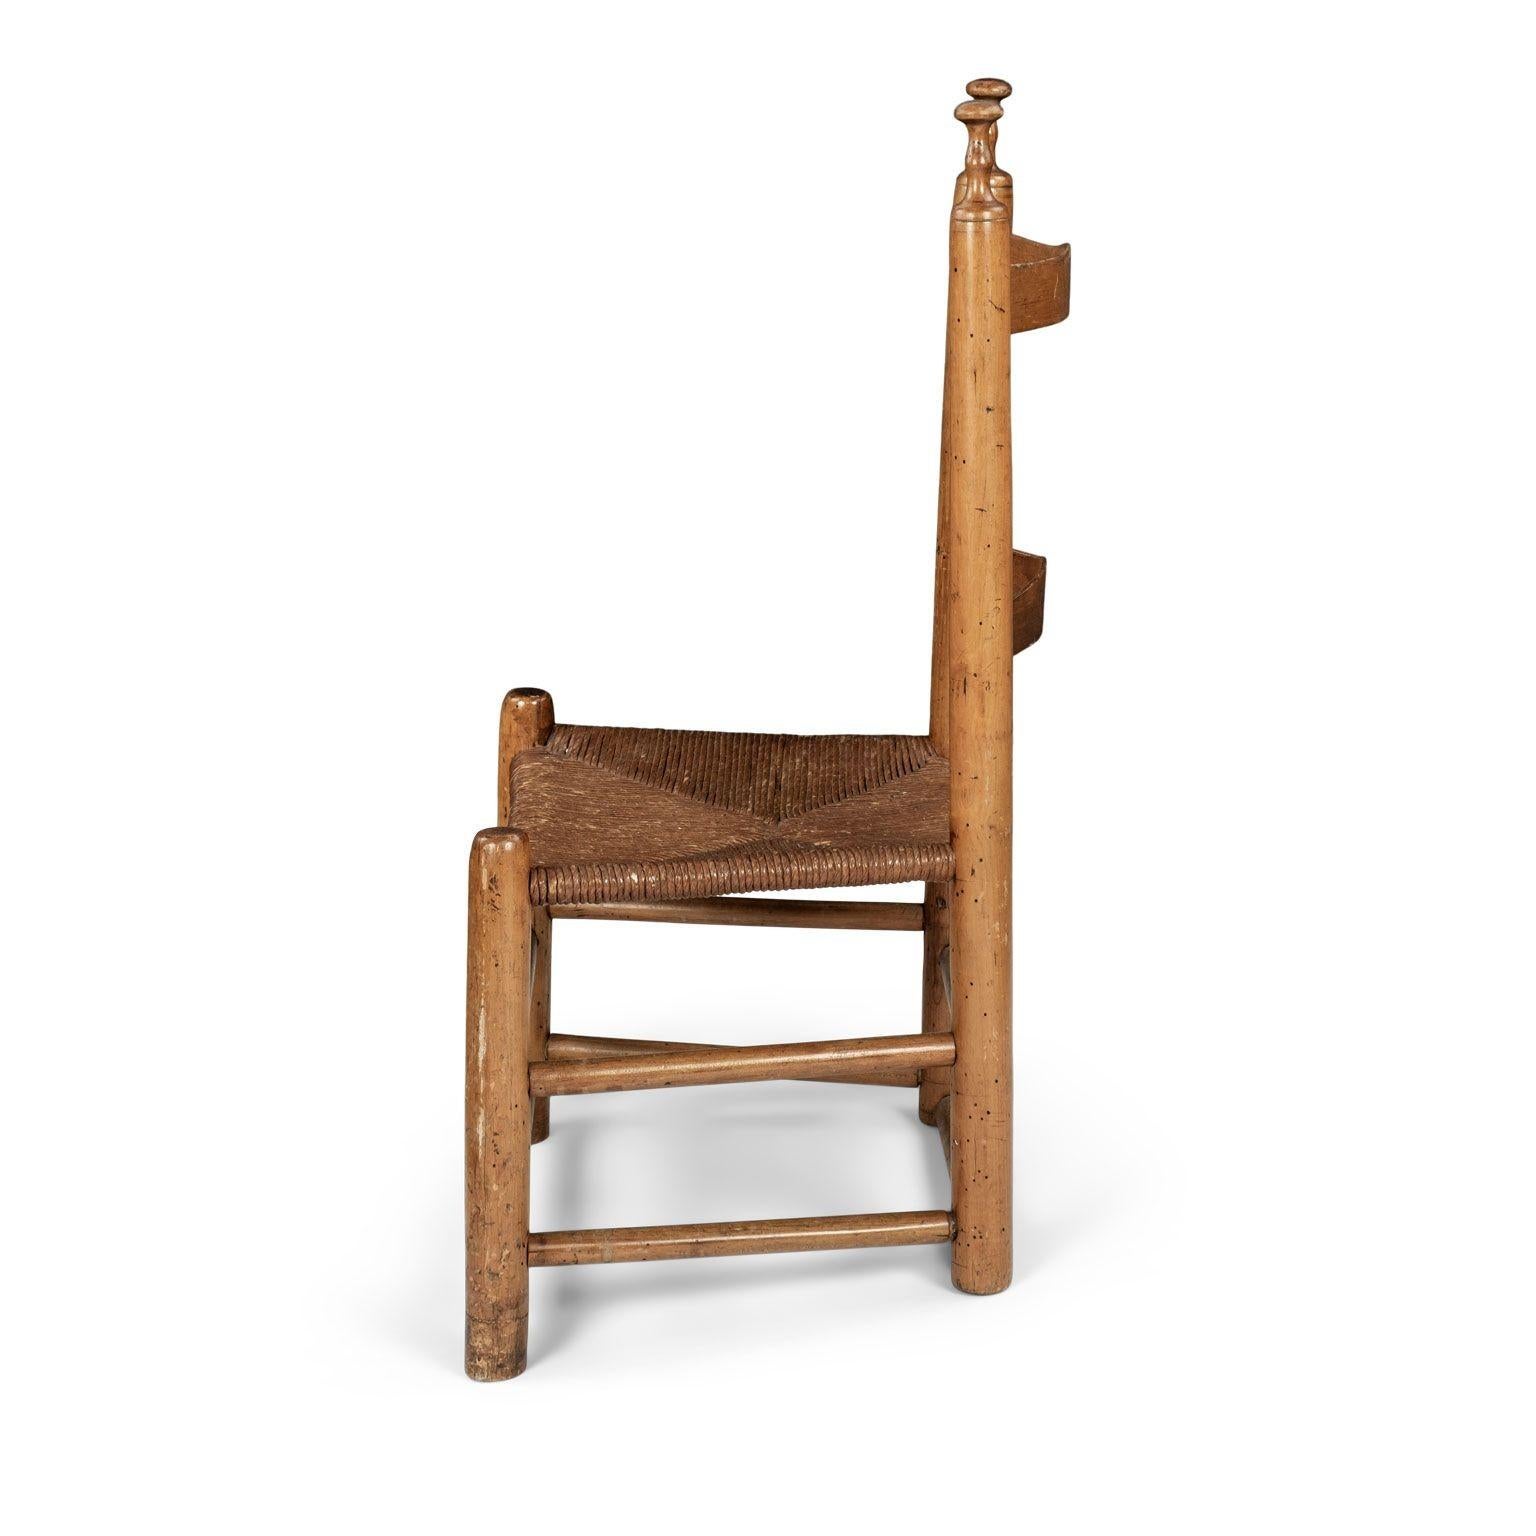 19th Century Vernacular Ladder Back Chair